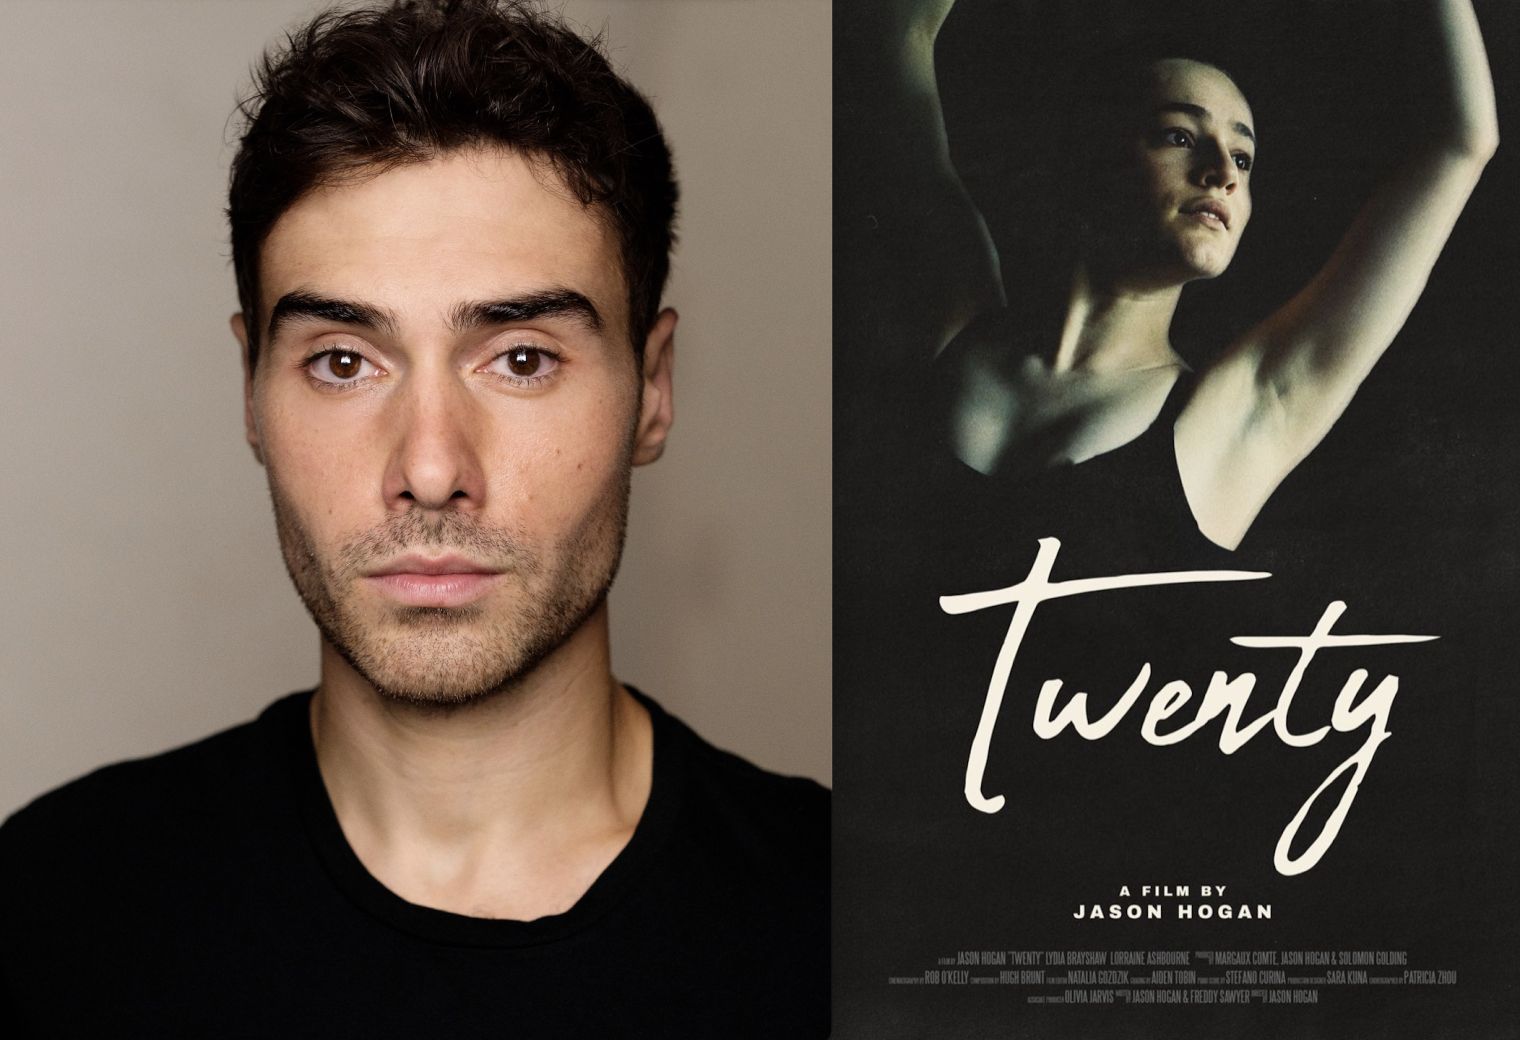 Jason Hogan’s short film ’Twenty’ has been selected for the Santa Fe International Film Festival this week